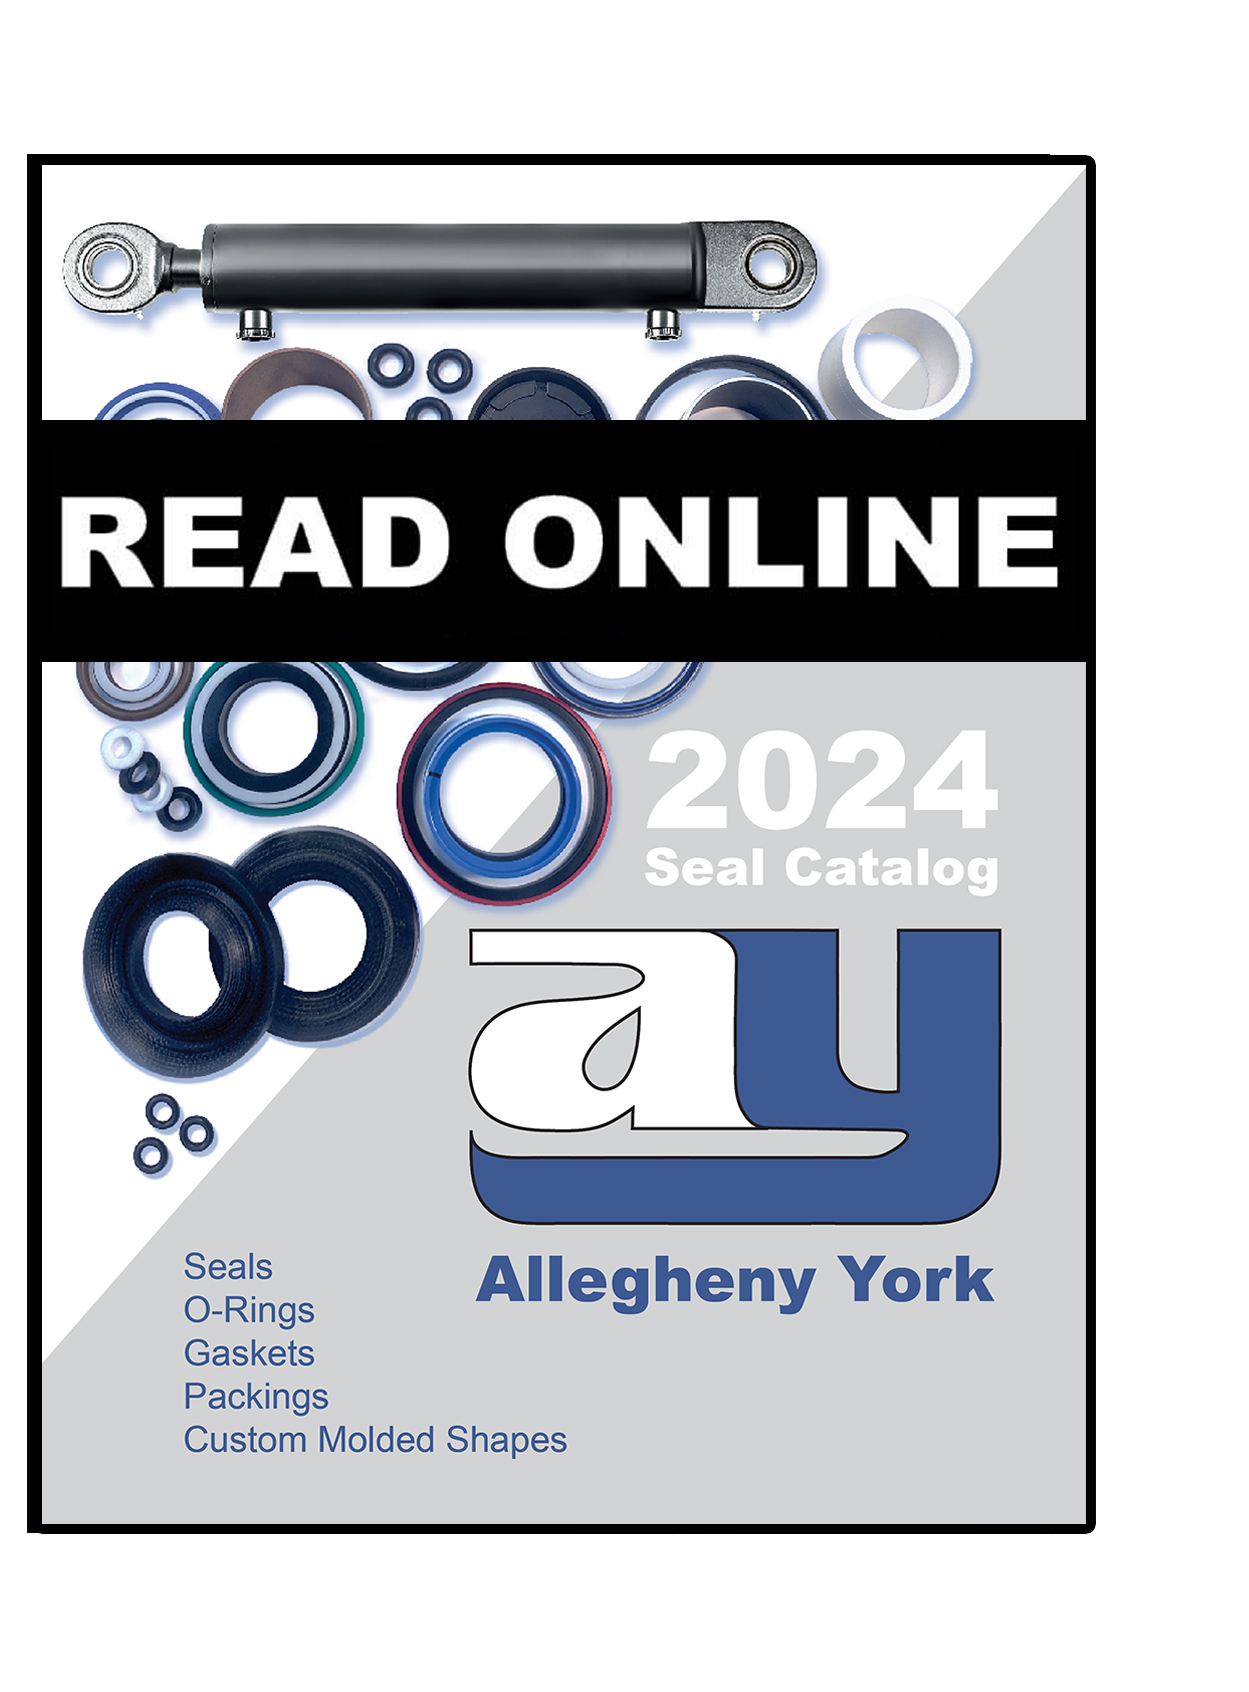 Allegheny York 2024 Catalog Read Online